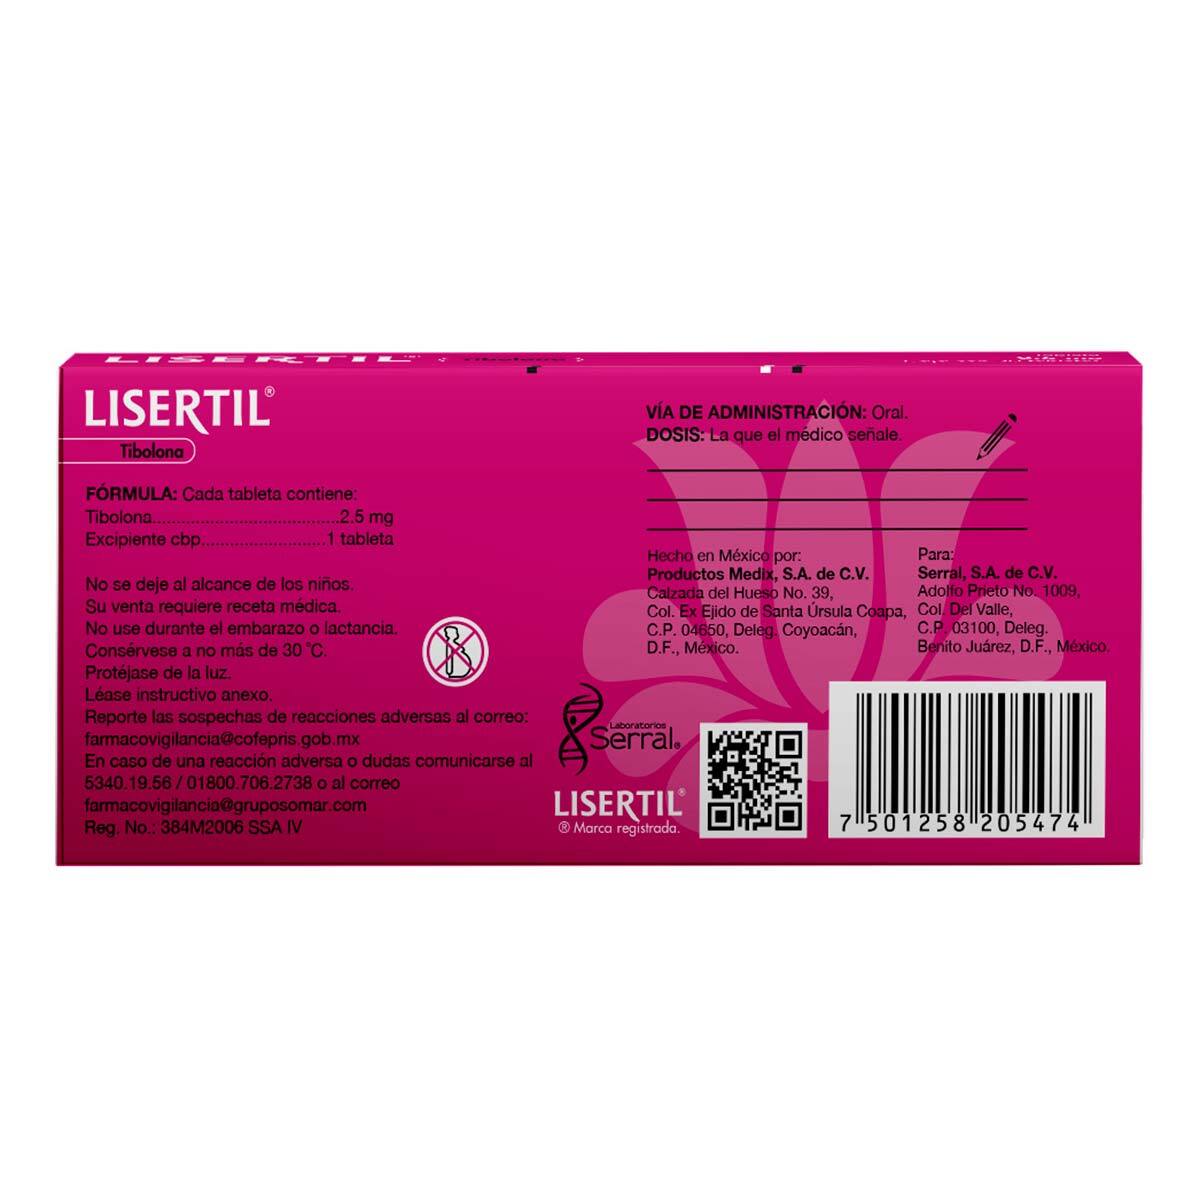 Lisertil Tibolona 2.5mg  30 Tabletas